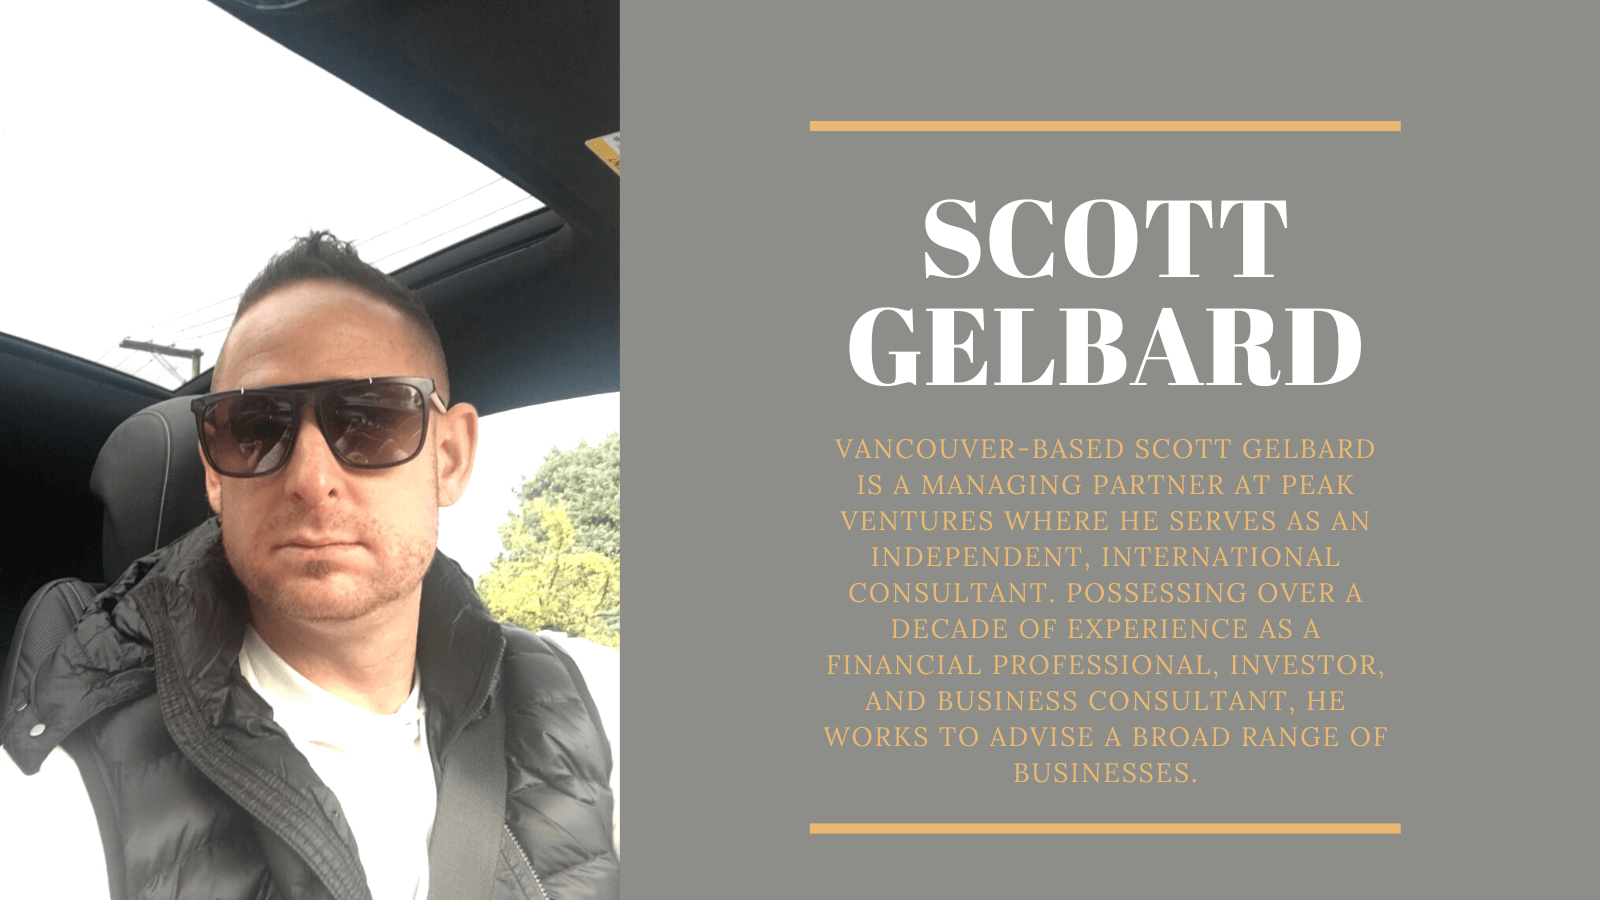 Scott Gelbard Bio Card